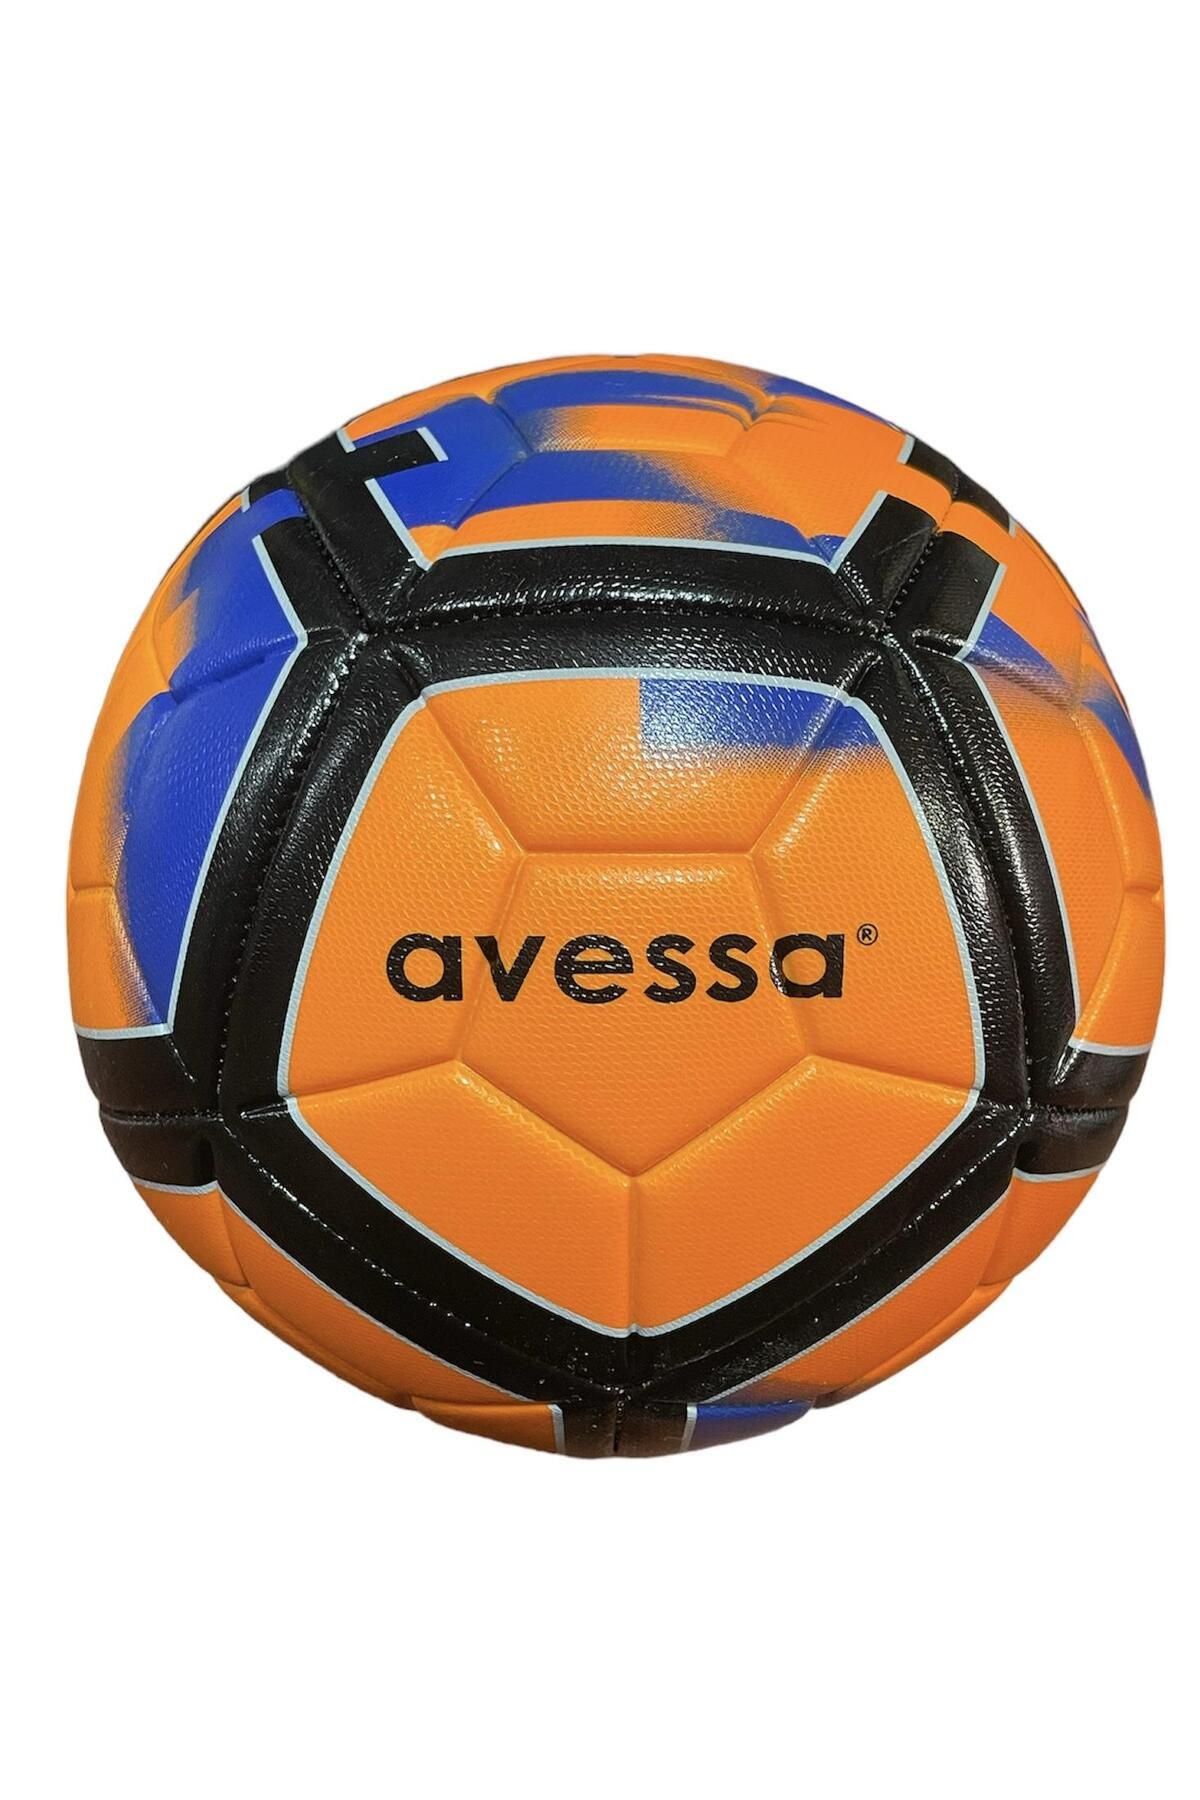 Avessa Ft-200d Futbol Topu 4 Astar 410-420 gr